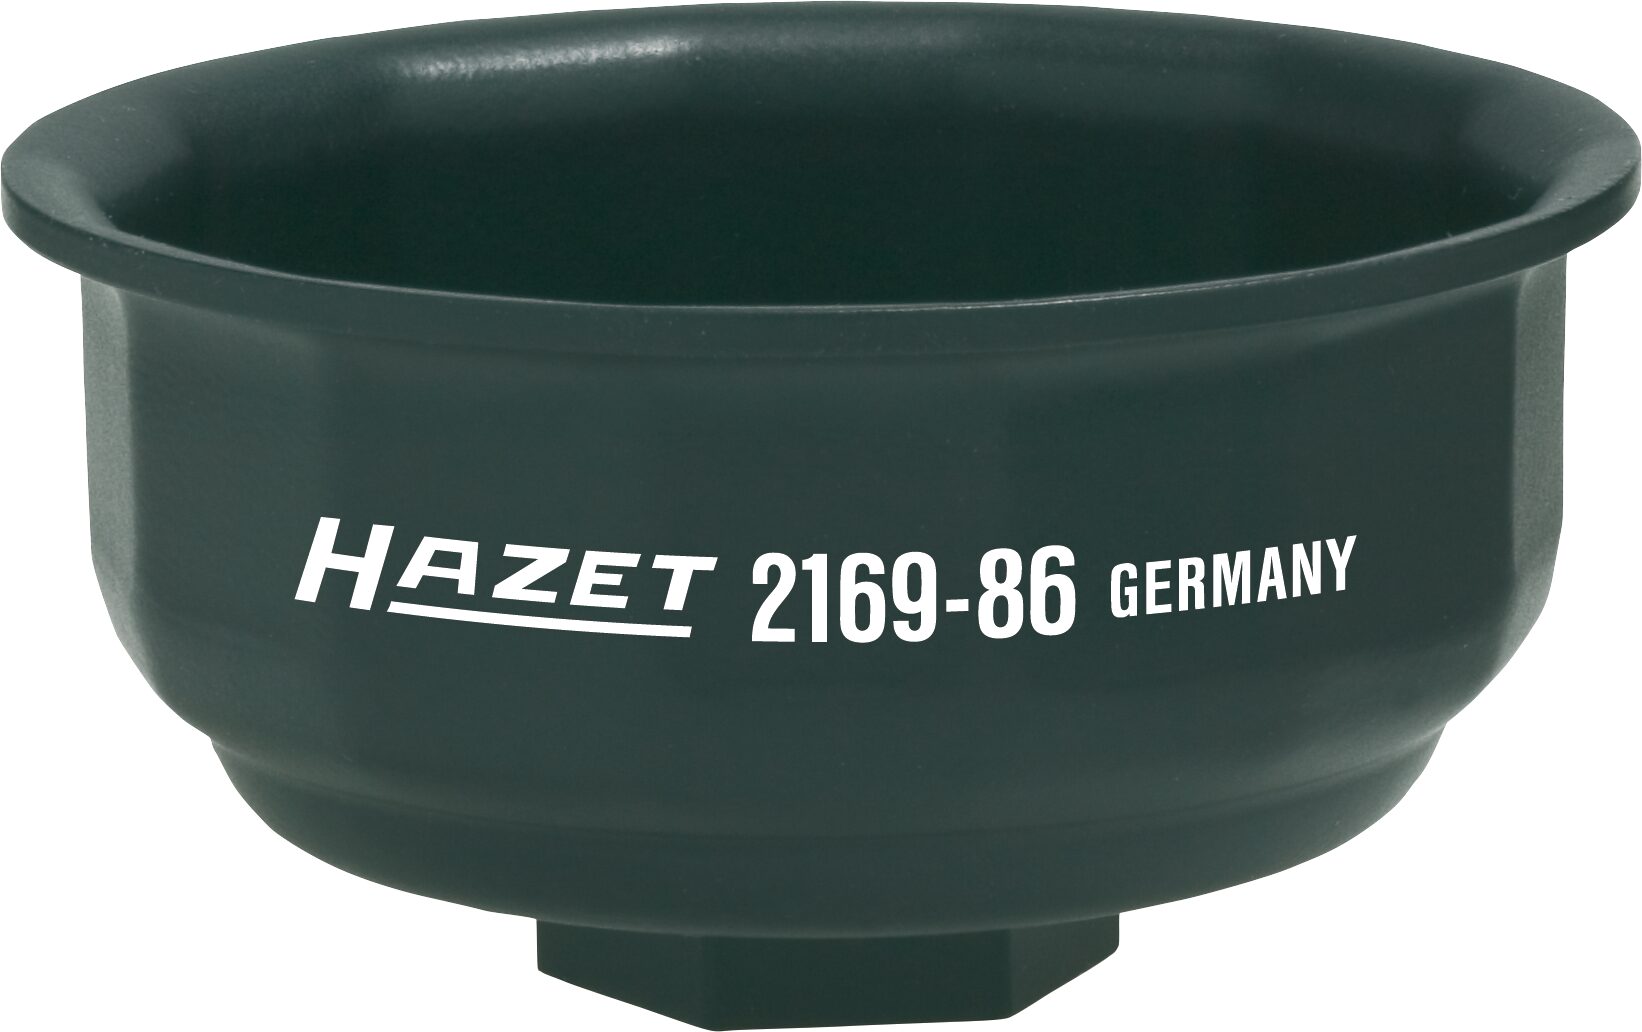 HAZET Ölfilter-Schlüssel 2169-86 · Vierkant hohl 12,5 mm (1/2 Zoll) · Rillenprofil · 97 mm